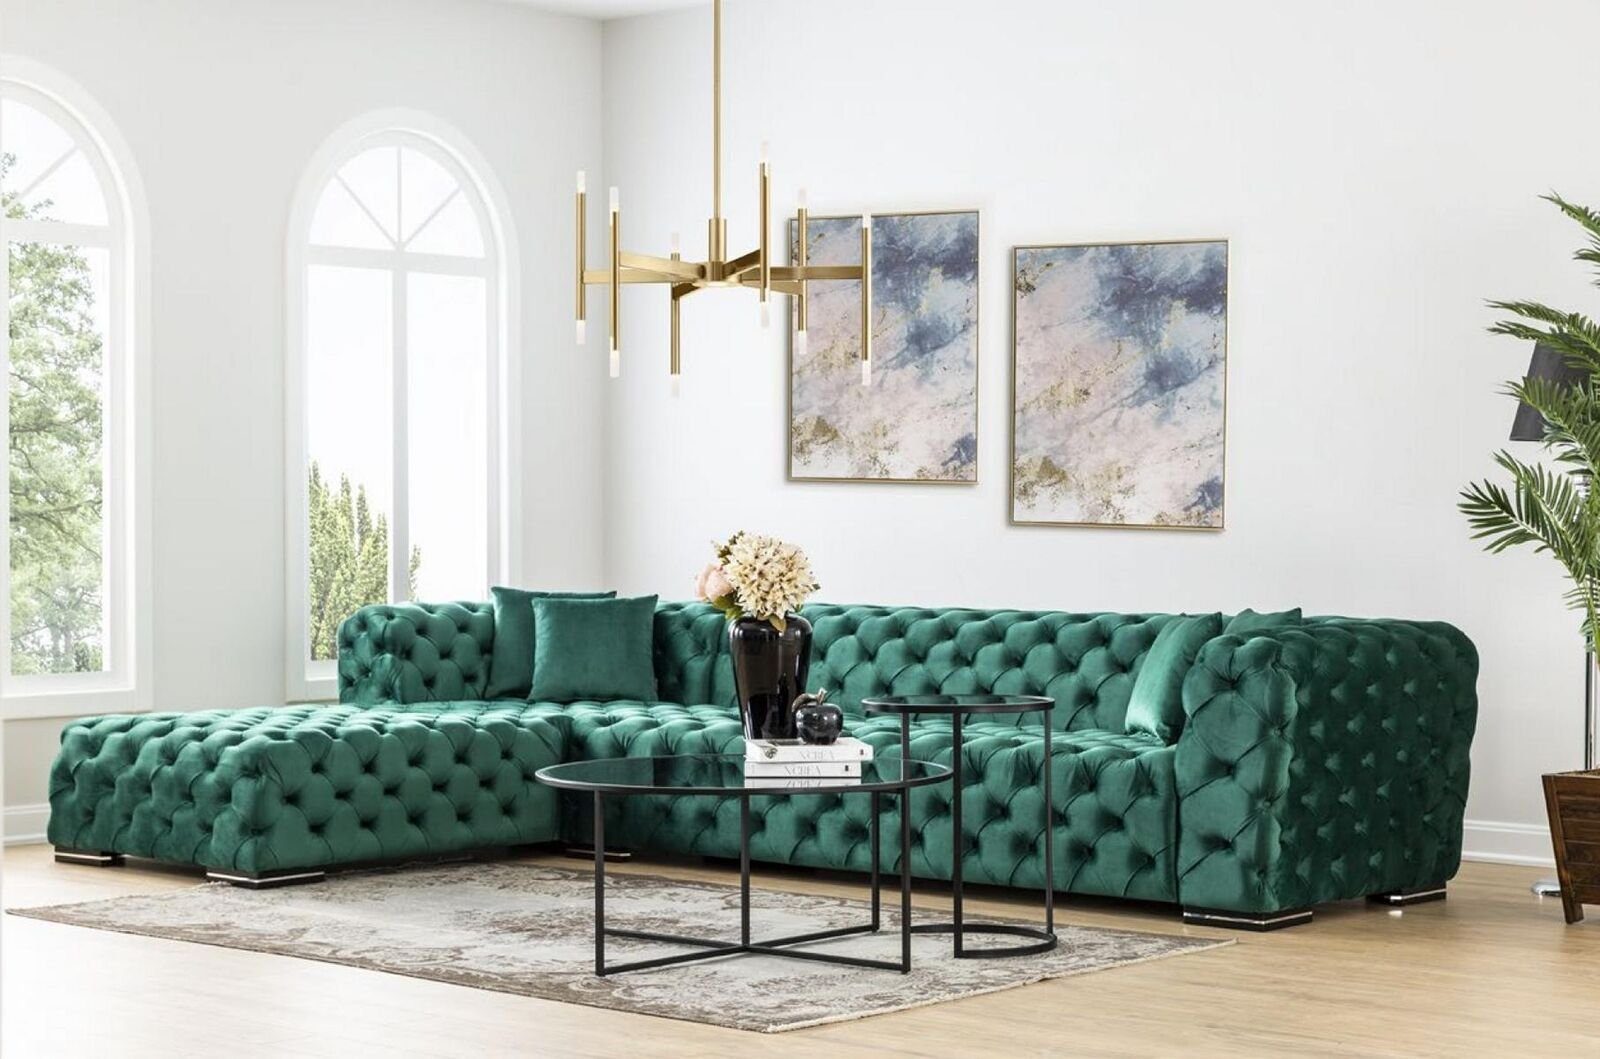 JVmoebel Ecksofa Sofa Ecksofa Eck Neu Polster Grün Textil Design L Form Couch Garnitur